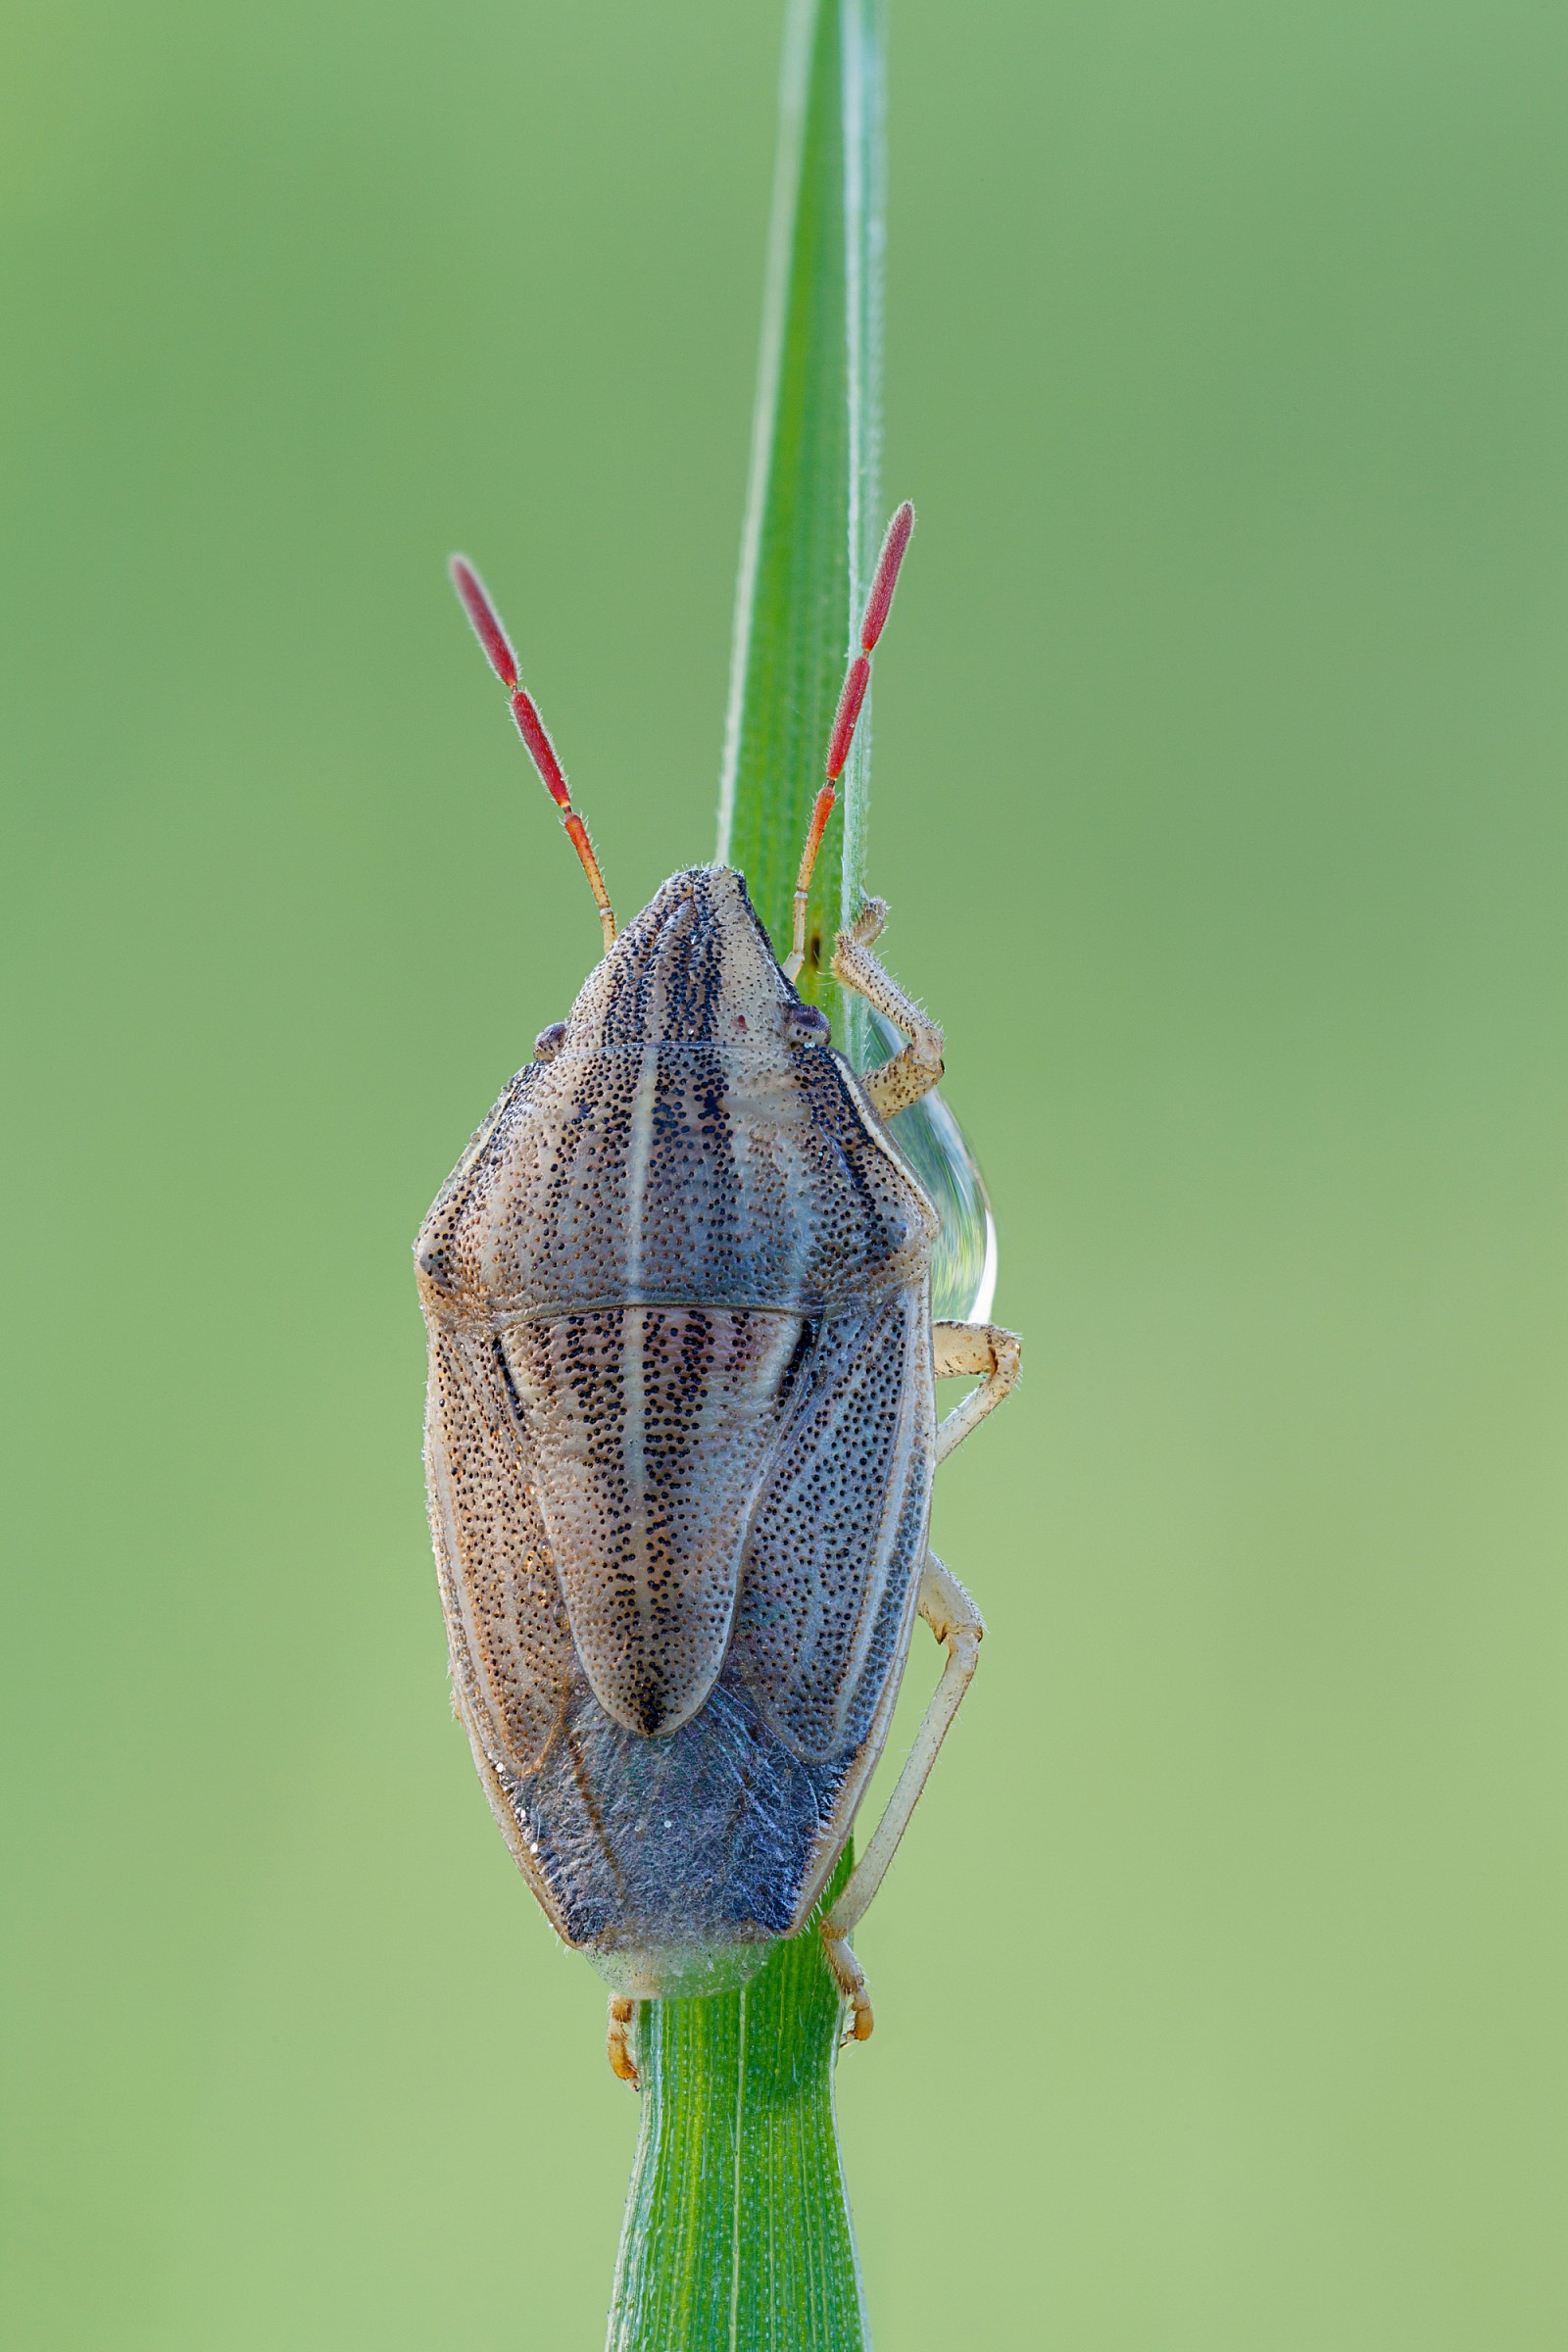 Aelia bug on grass blade...